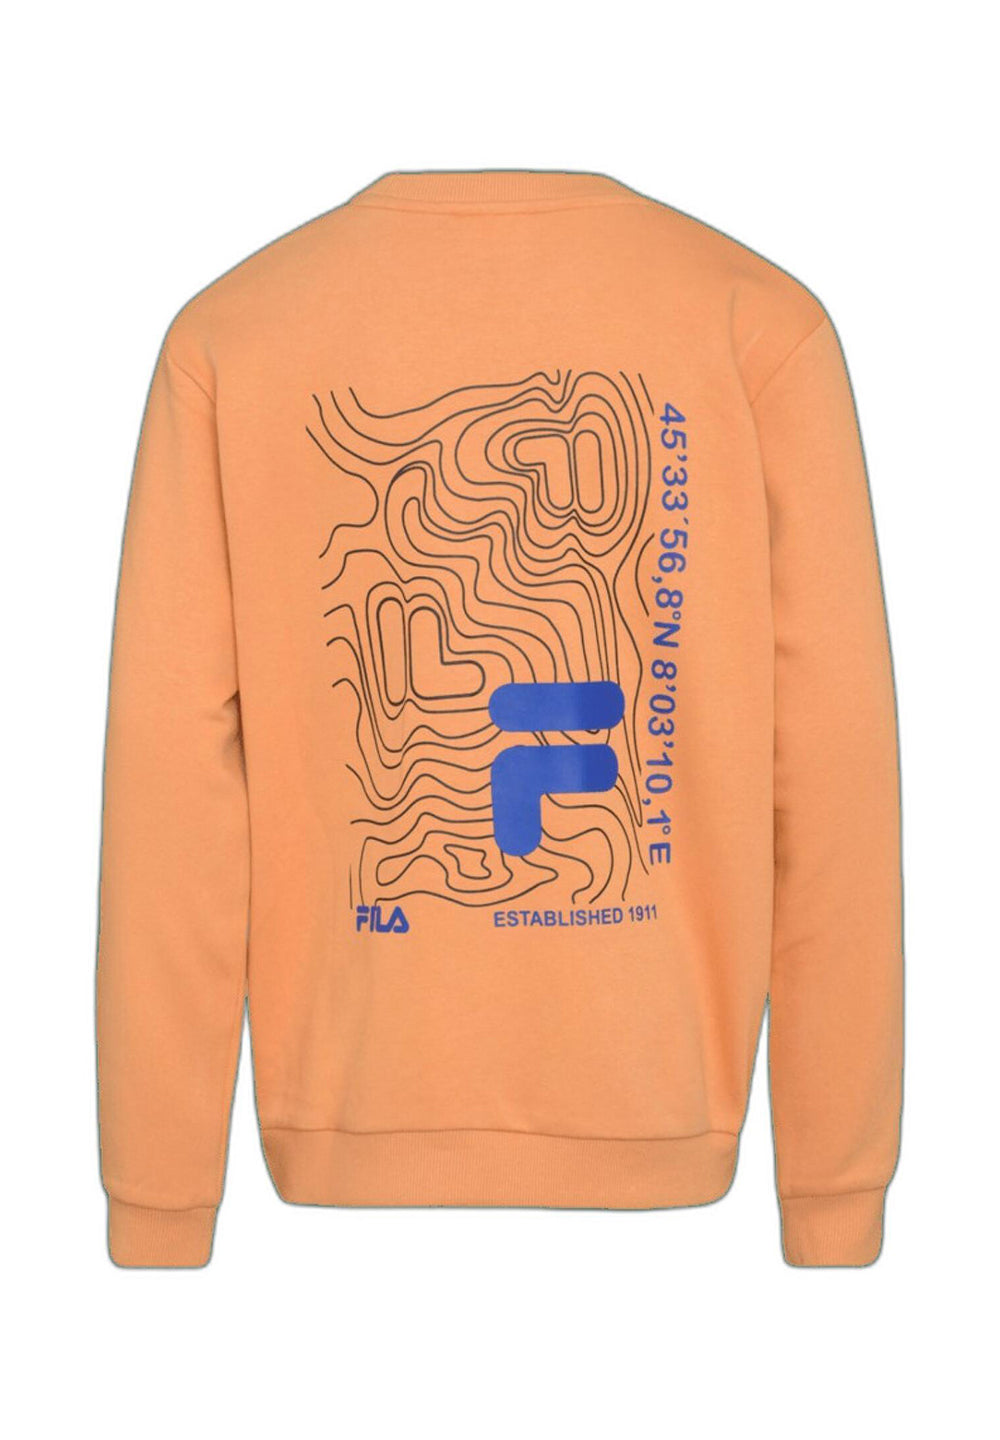 Orange crewneck sweatshirt for boys